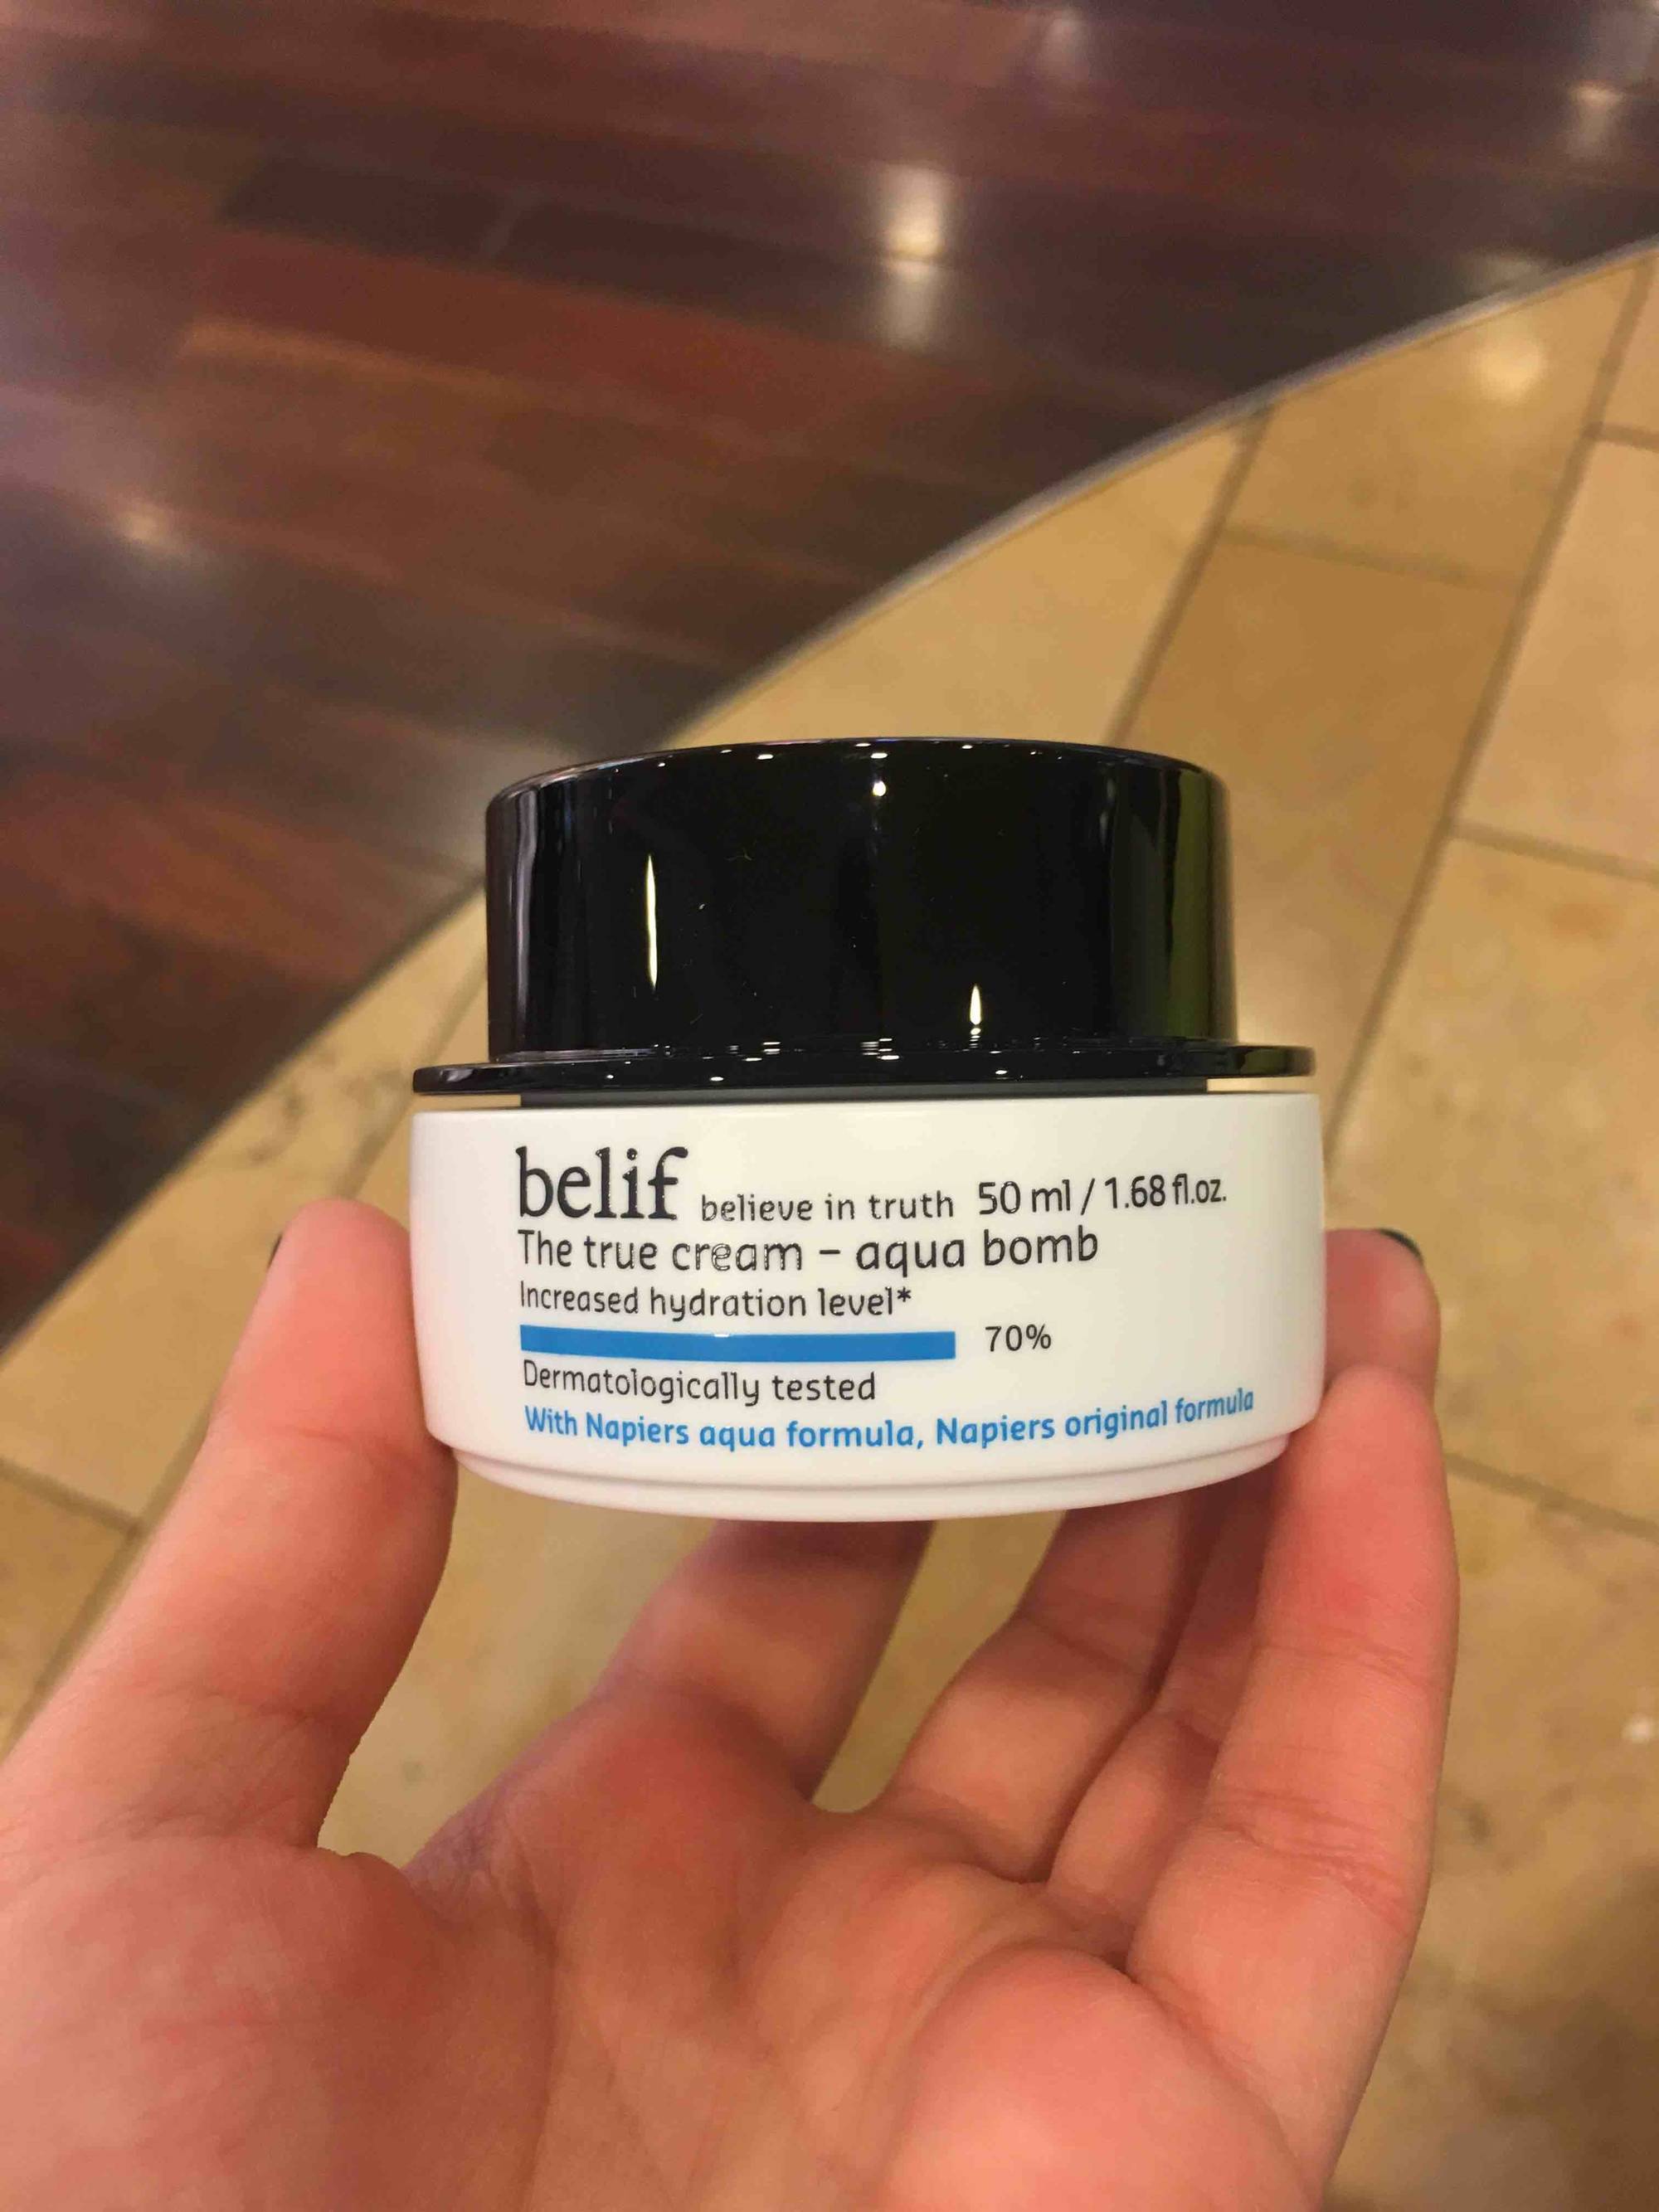 BELIF - The true cream - Aqua bomb - Increased hydration level